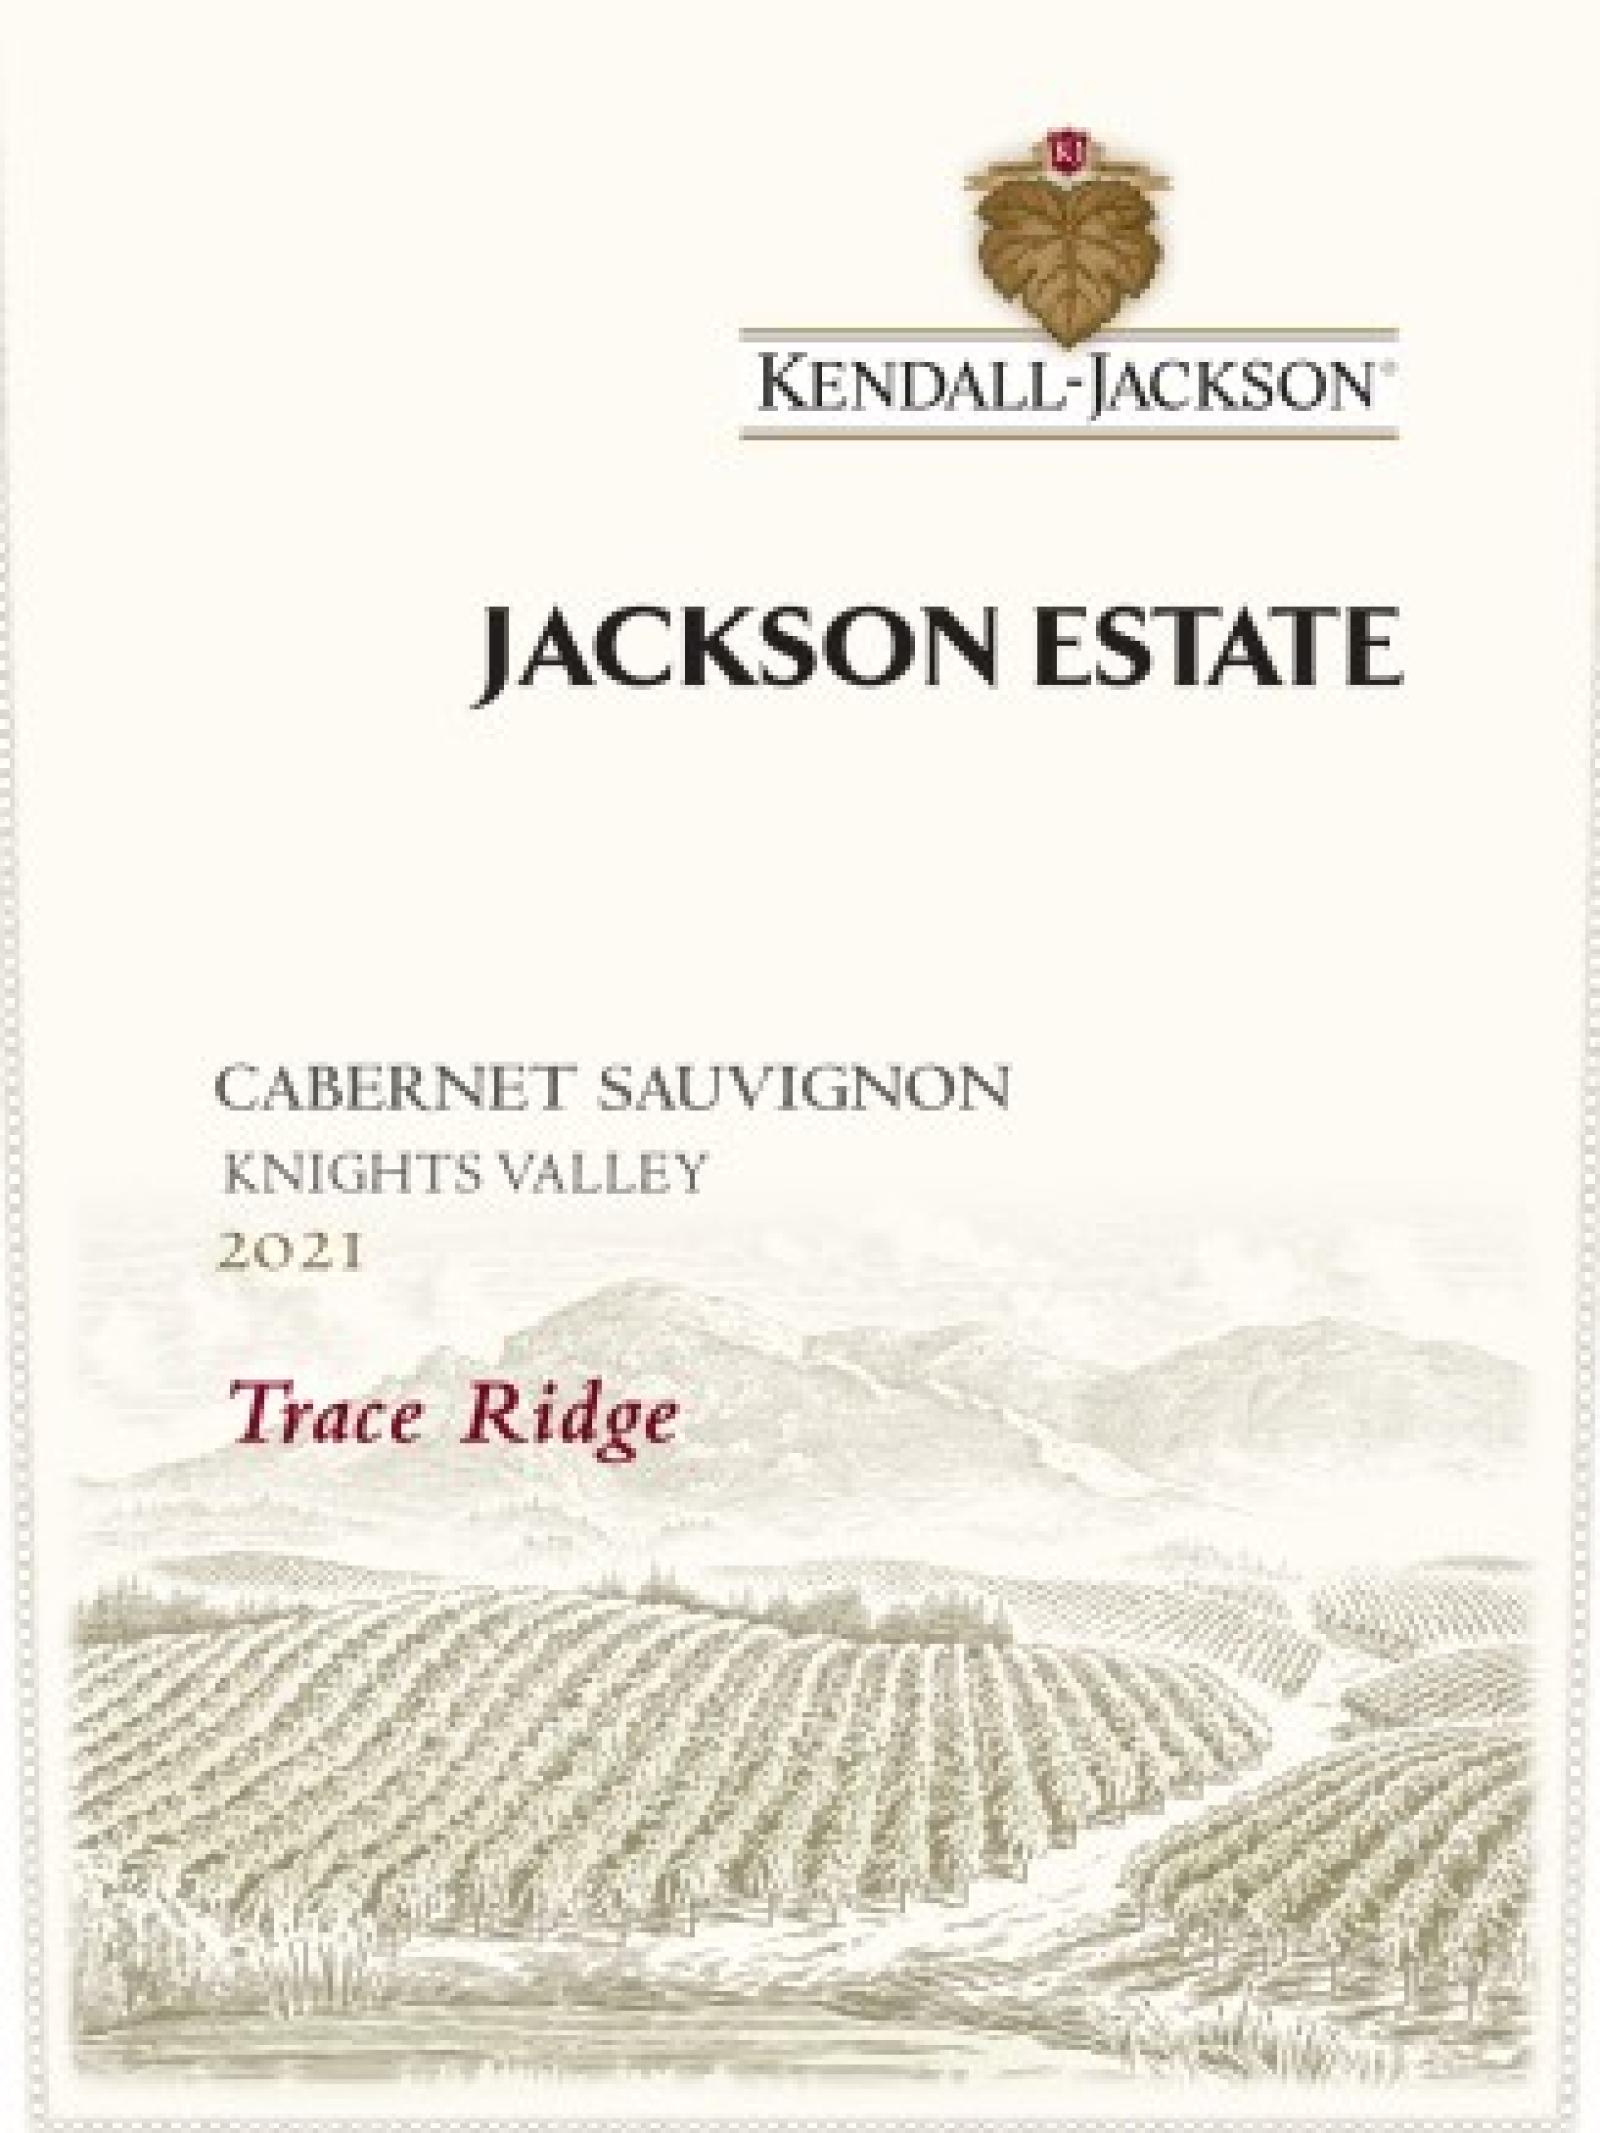 Trace Ridge Cab 2021 Kendall-Jackson